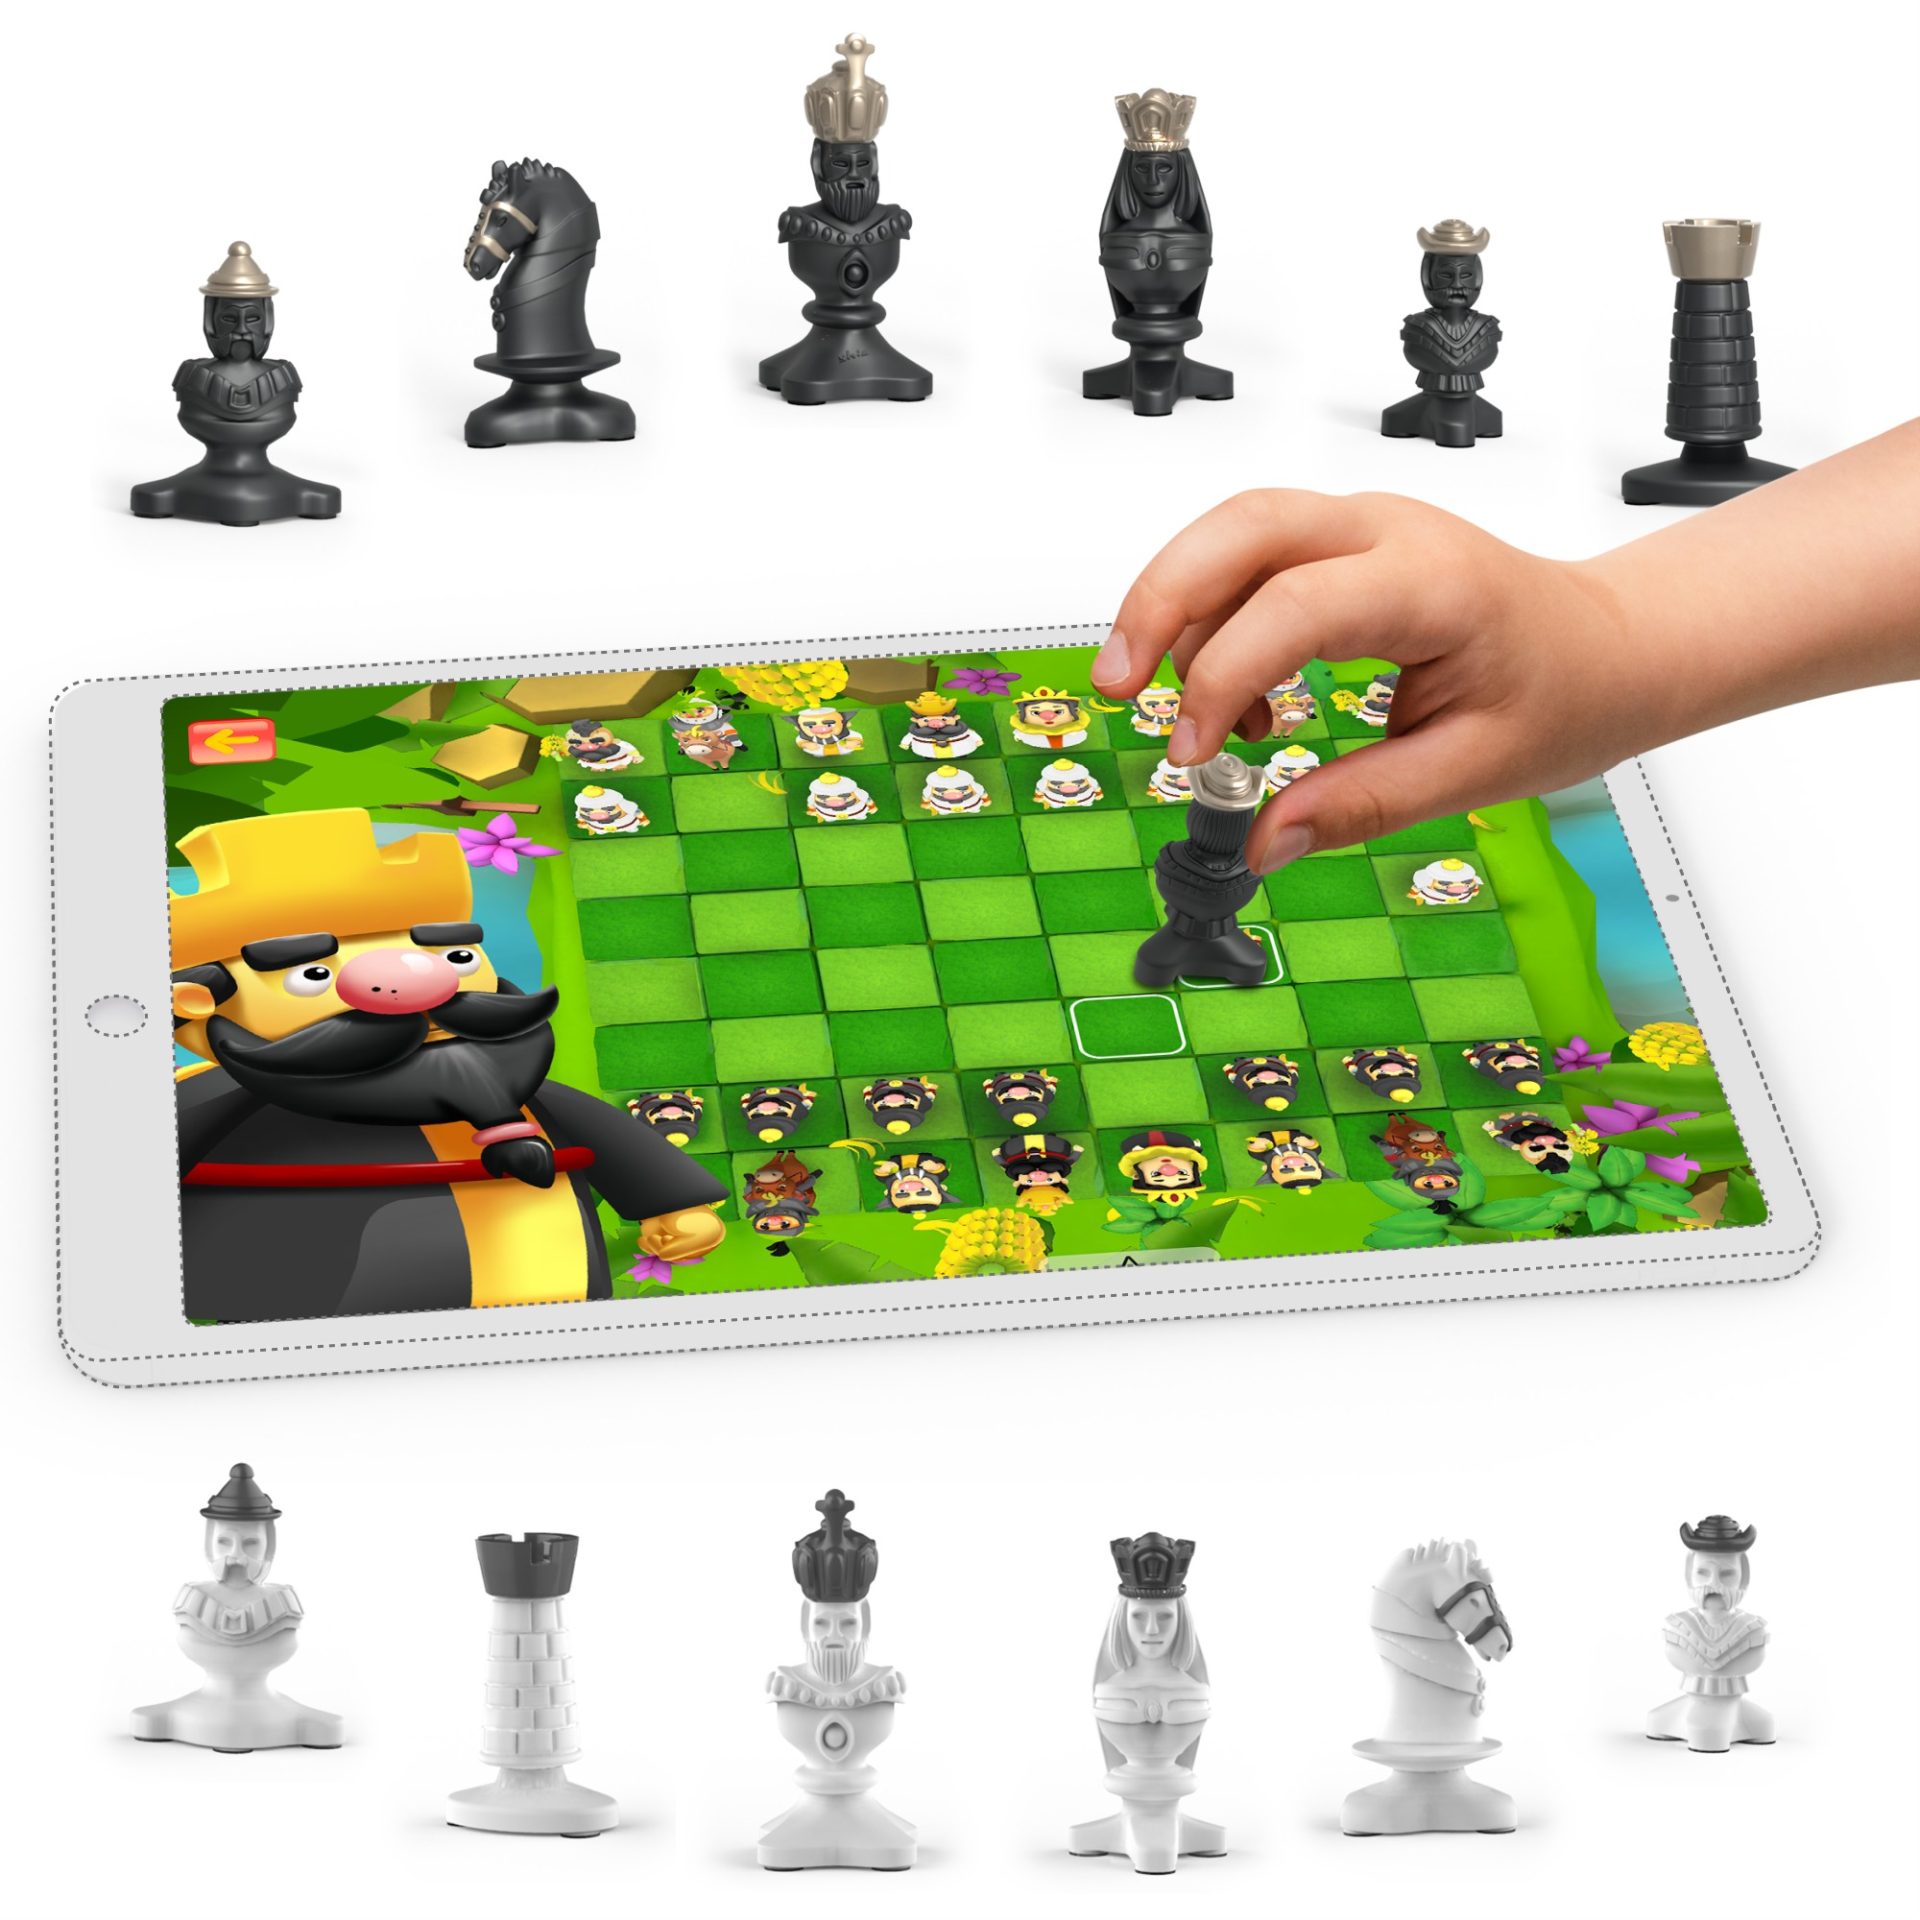 PlayShifu Tacto chess